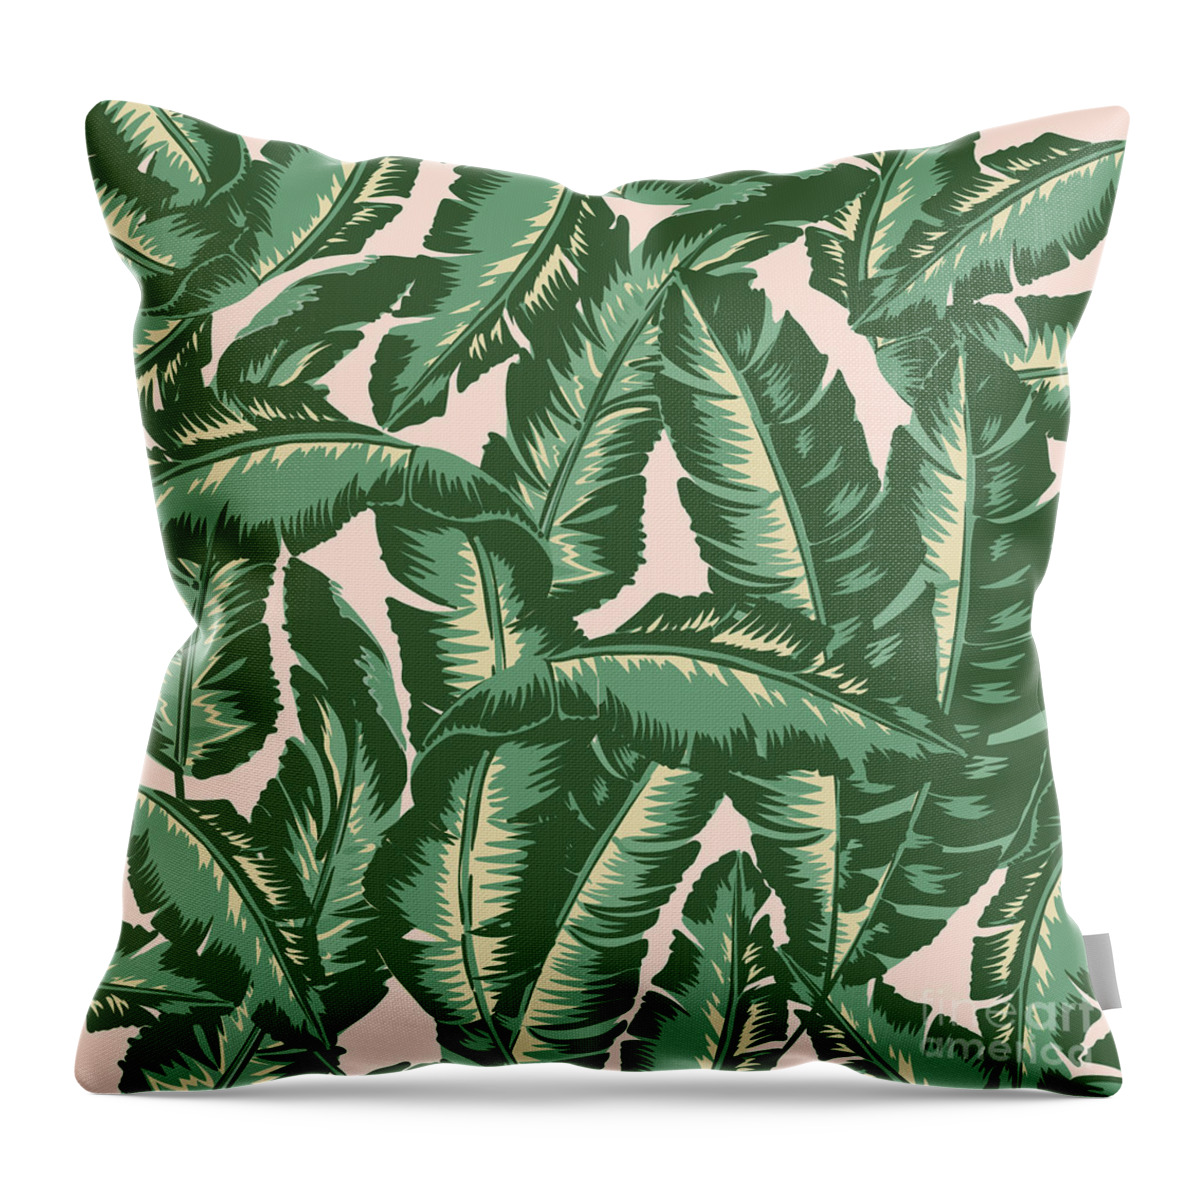 #faatoppicks Throw Pillow featuring the digital art Palm Print by Lauren Amelia Hughes